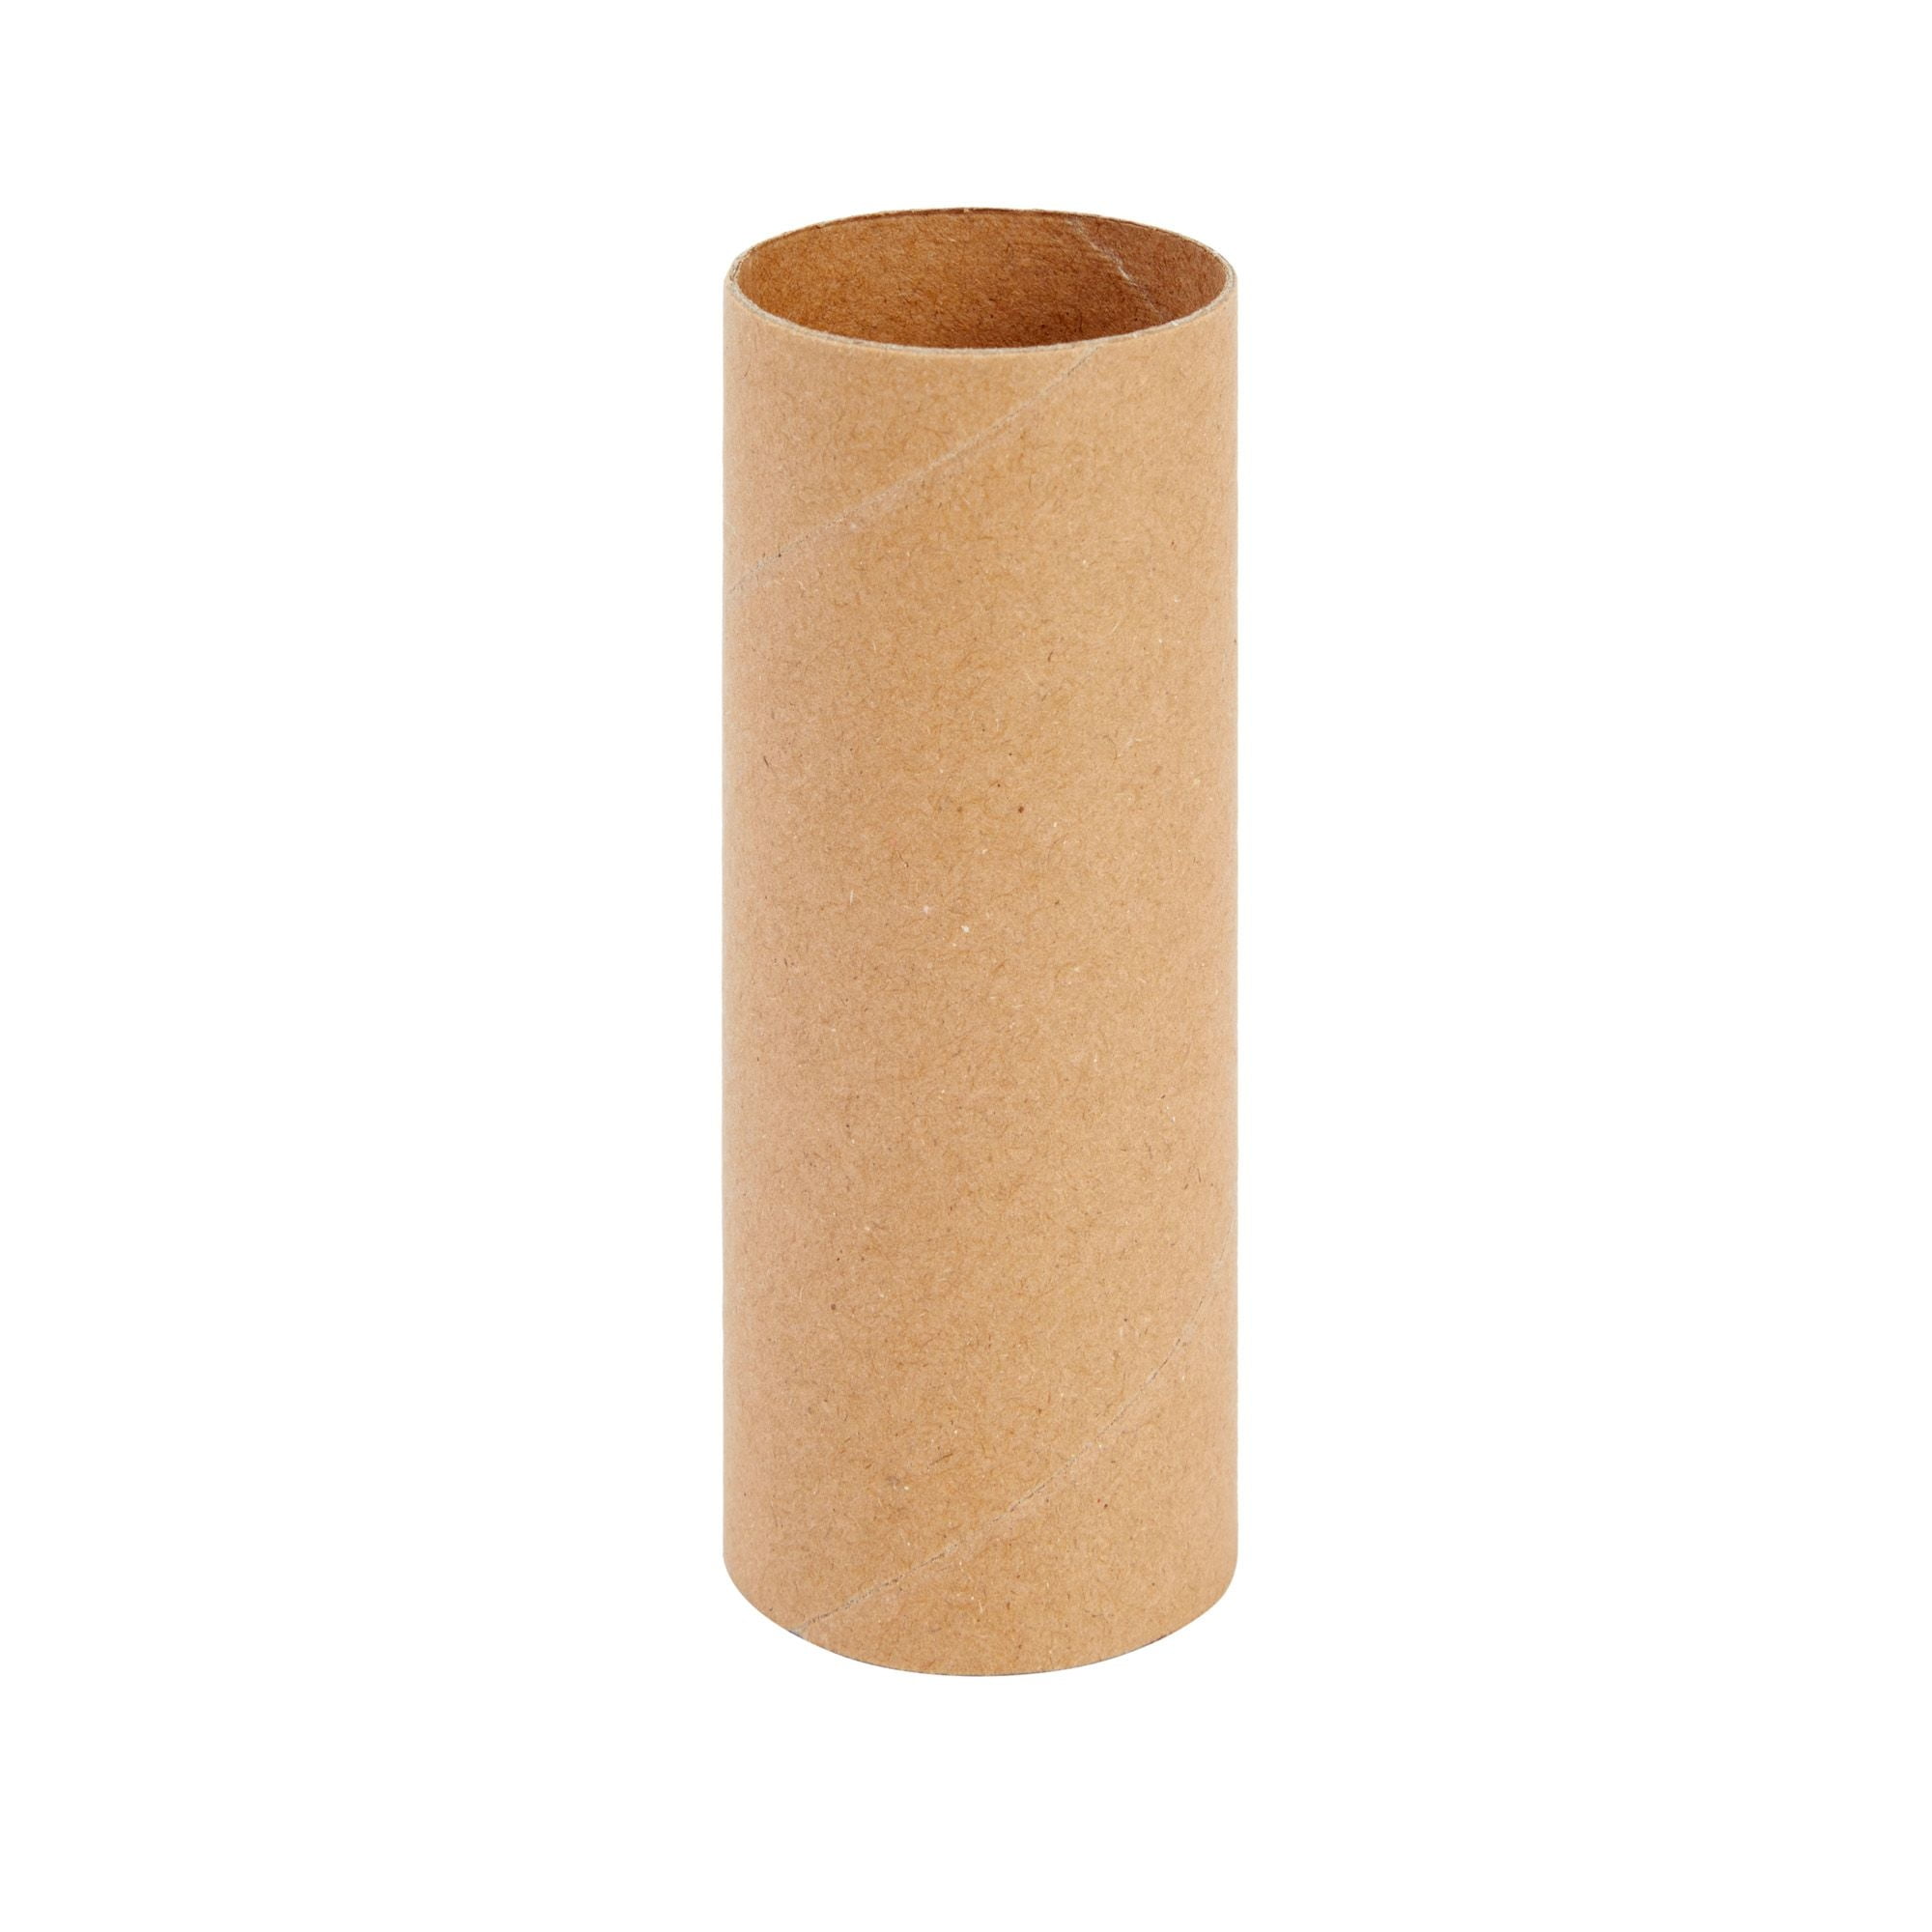 Henoyso 108 Pcs Brown Cardboard Tubes for Crafts 1.8 x 10 Inch Bulk Craft  Cardboard Tube Paper Towel Rolls Thick Paper Rolls Empty Craft Tubes for  Art